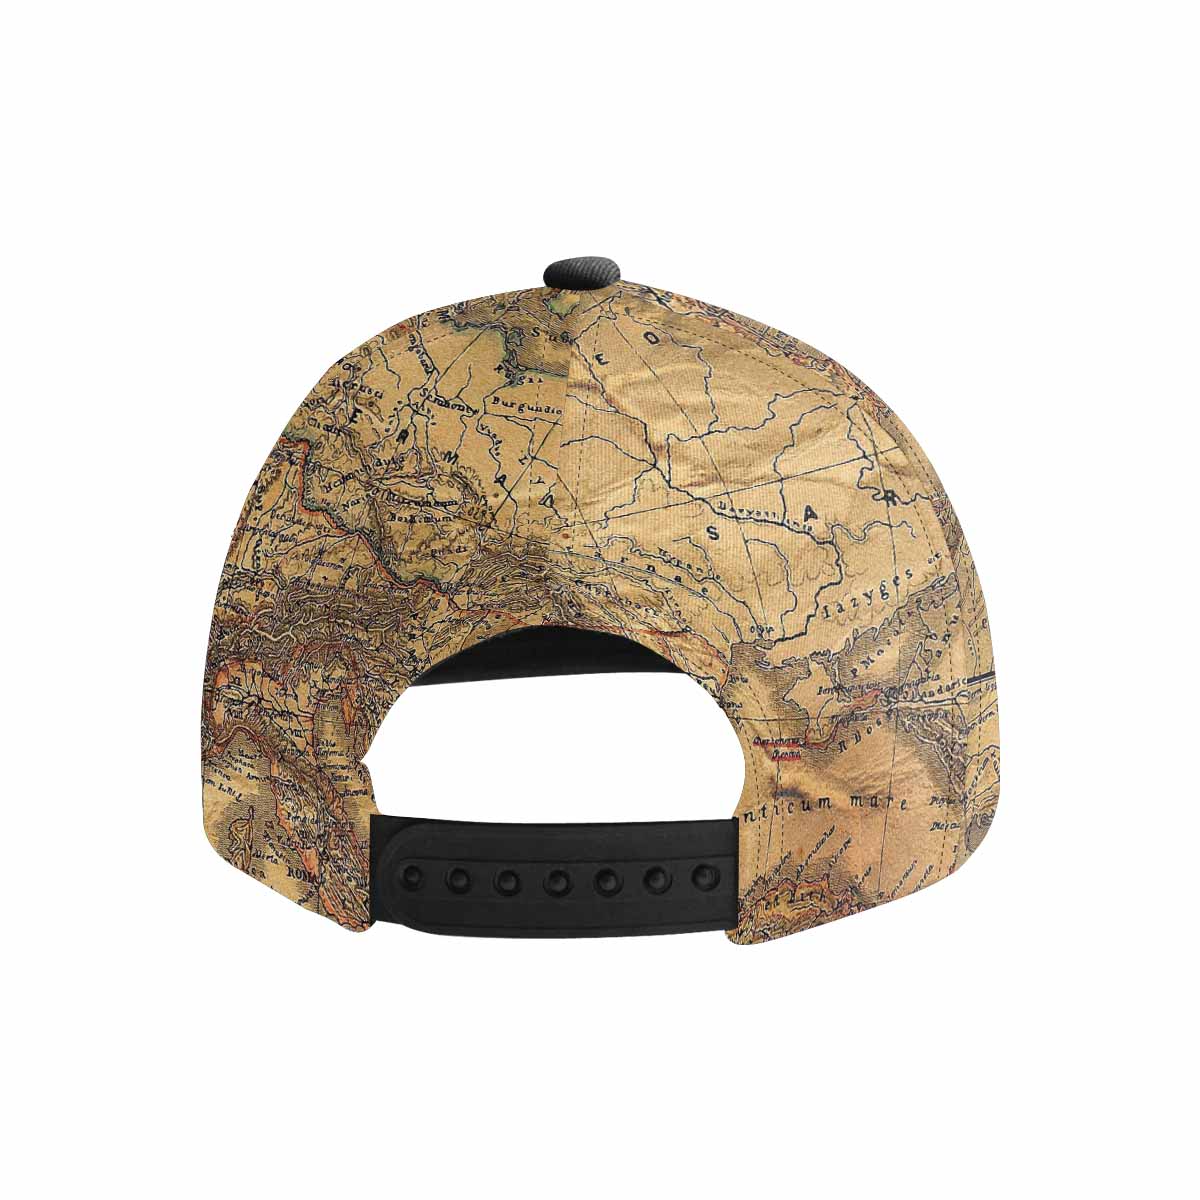 Antique Map design mens or womens deep snapback cap, trucker hat, Design 21